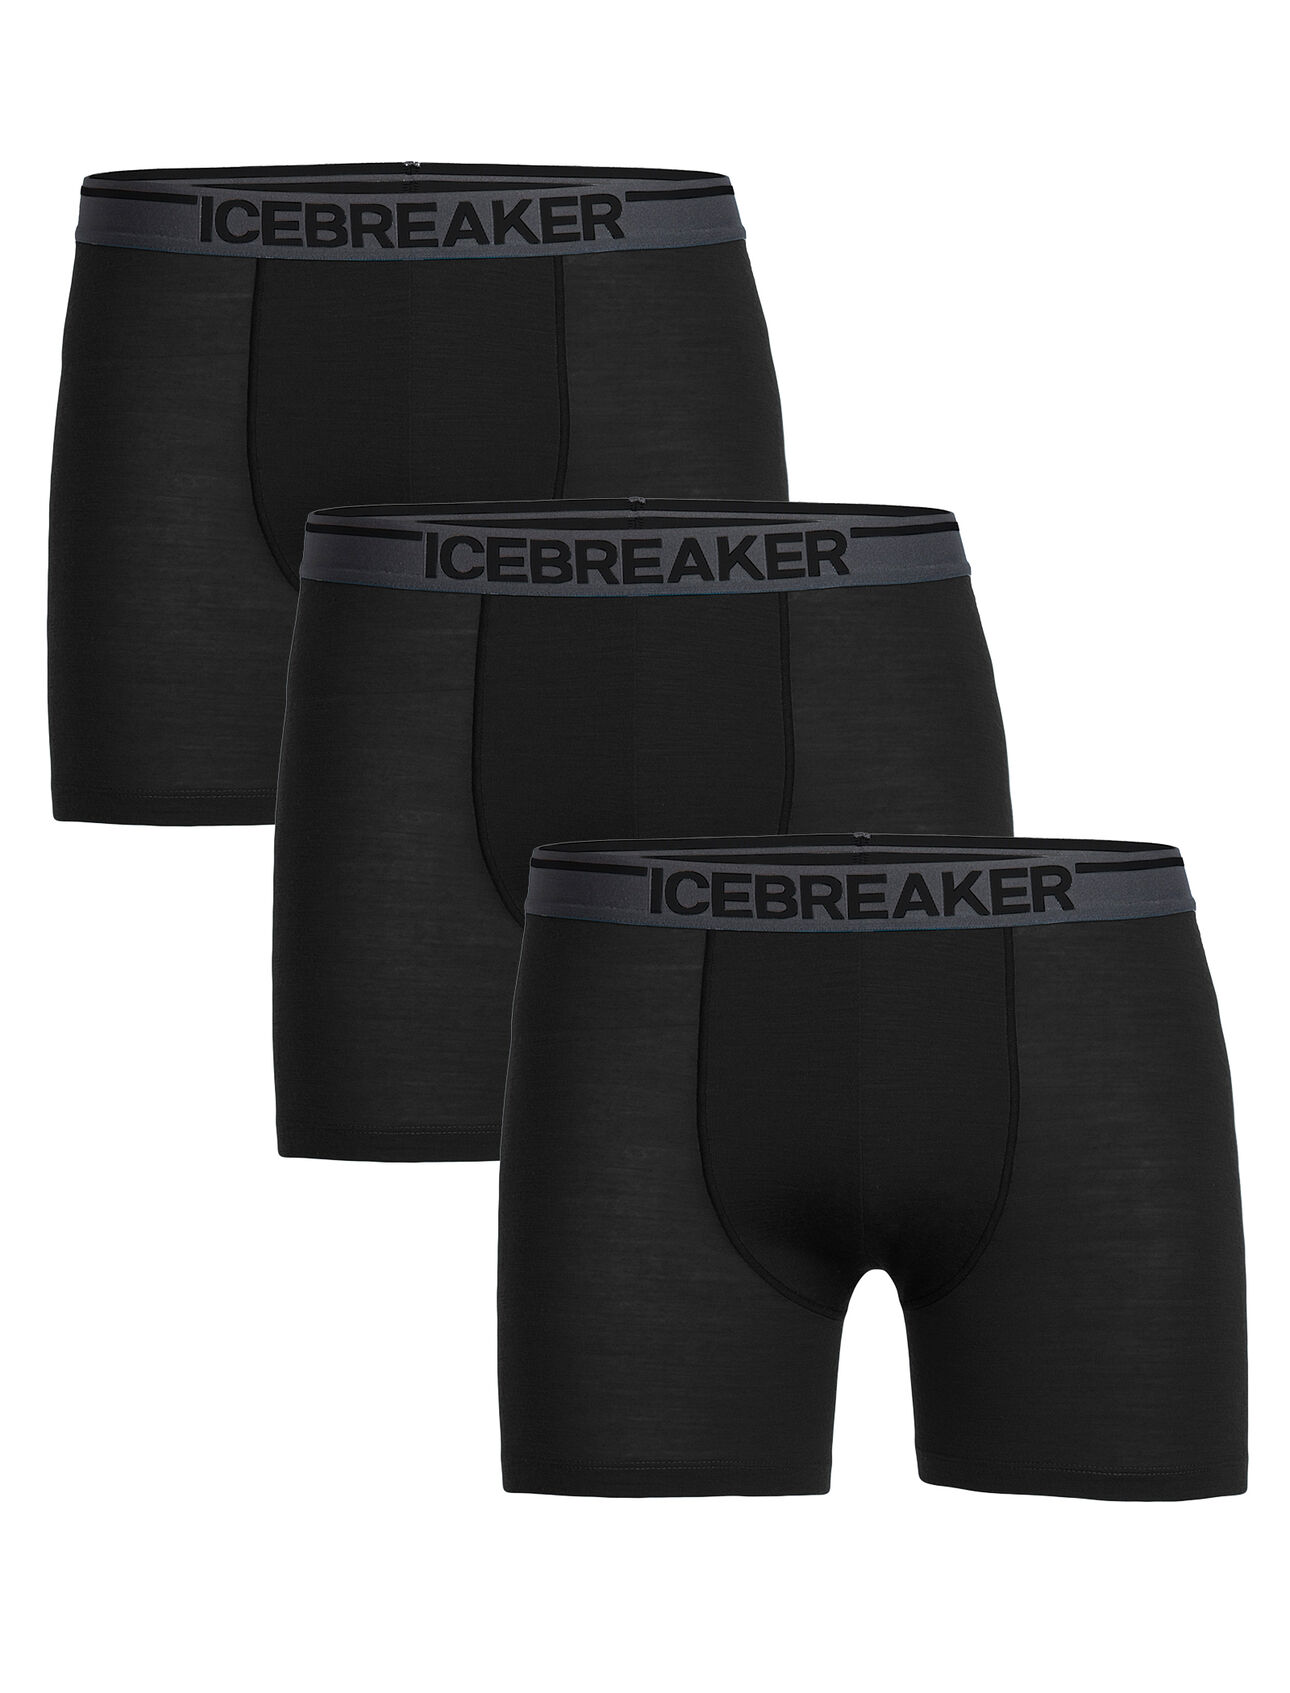 Icebreaker Merino Anatomica Cool-Lite Men's Underwear Boxer Briefs, Merino  Wool Blend, Comfy, Stretchy Boxers for Men with Moisture Wicking Fabric -  Men's Boxer Shorts, Black, Medium at  Men's Clothing store